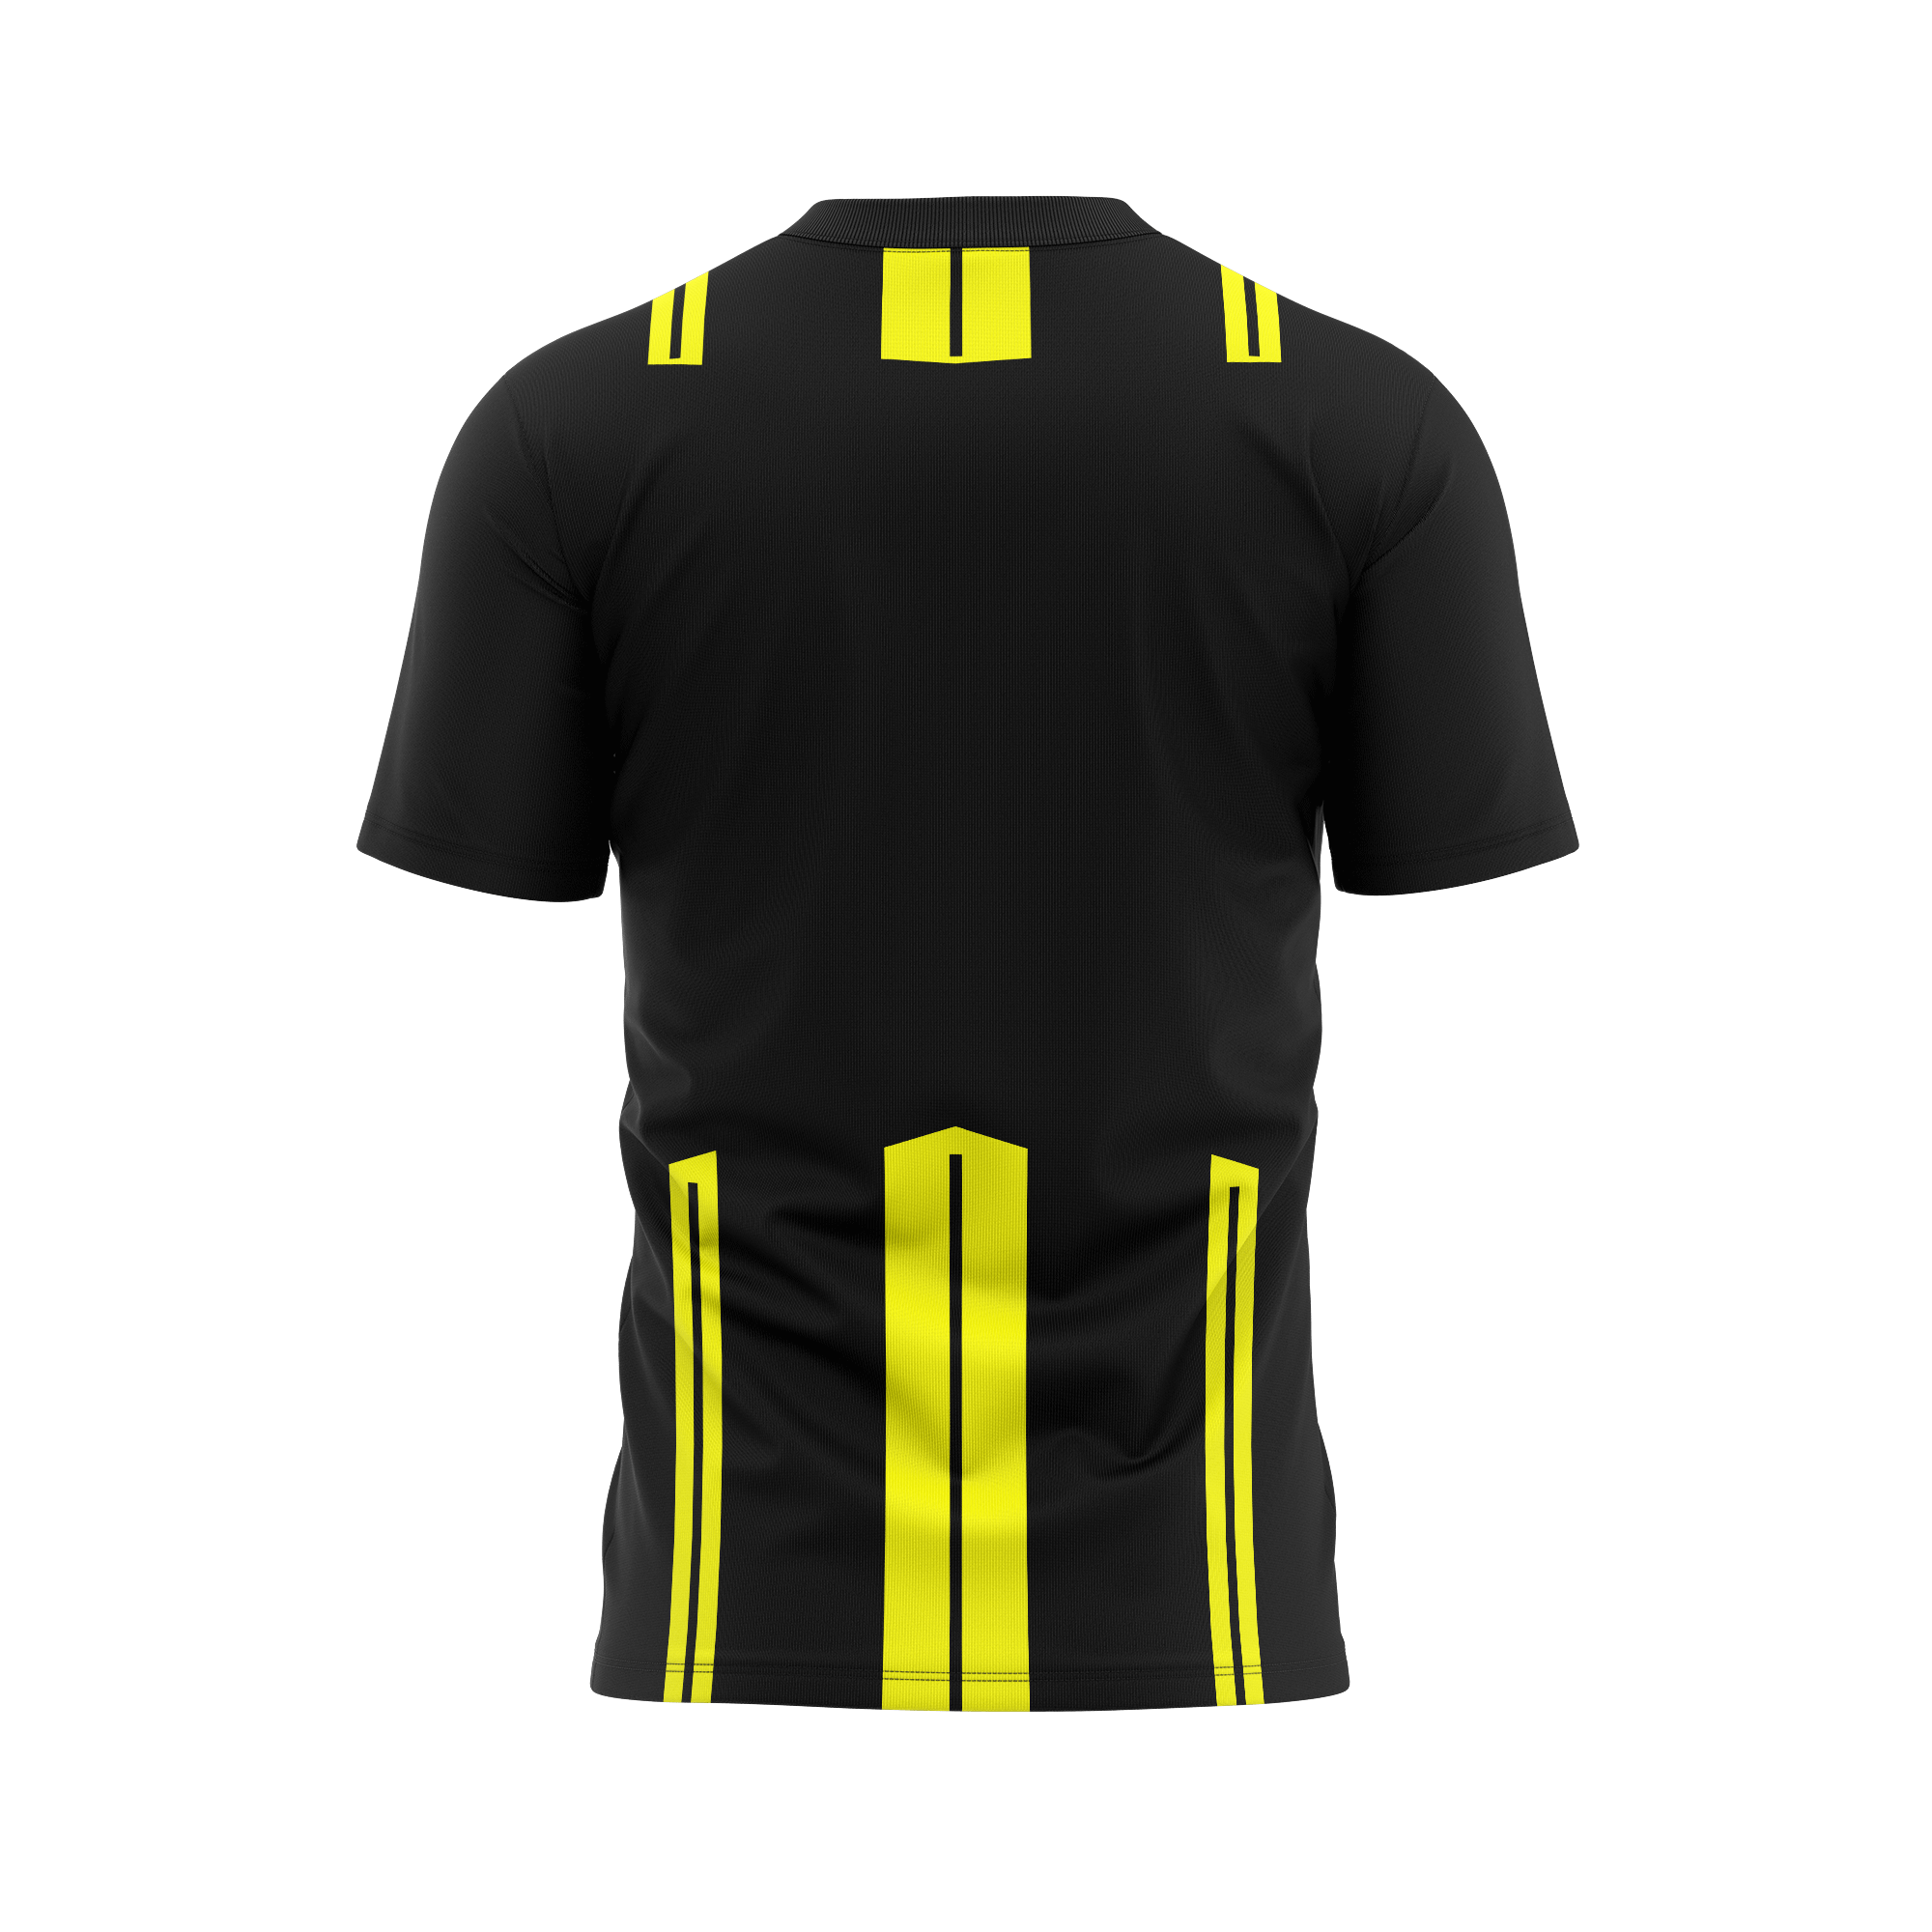 Rezista Customized Jersey - Sub Design-Black-26 | Customized T-shirts ...